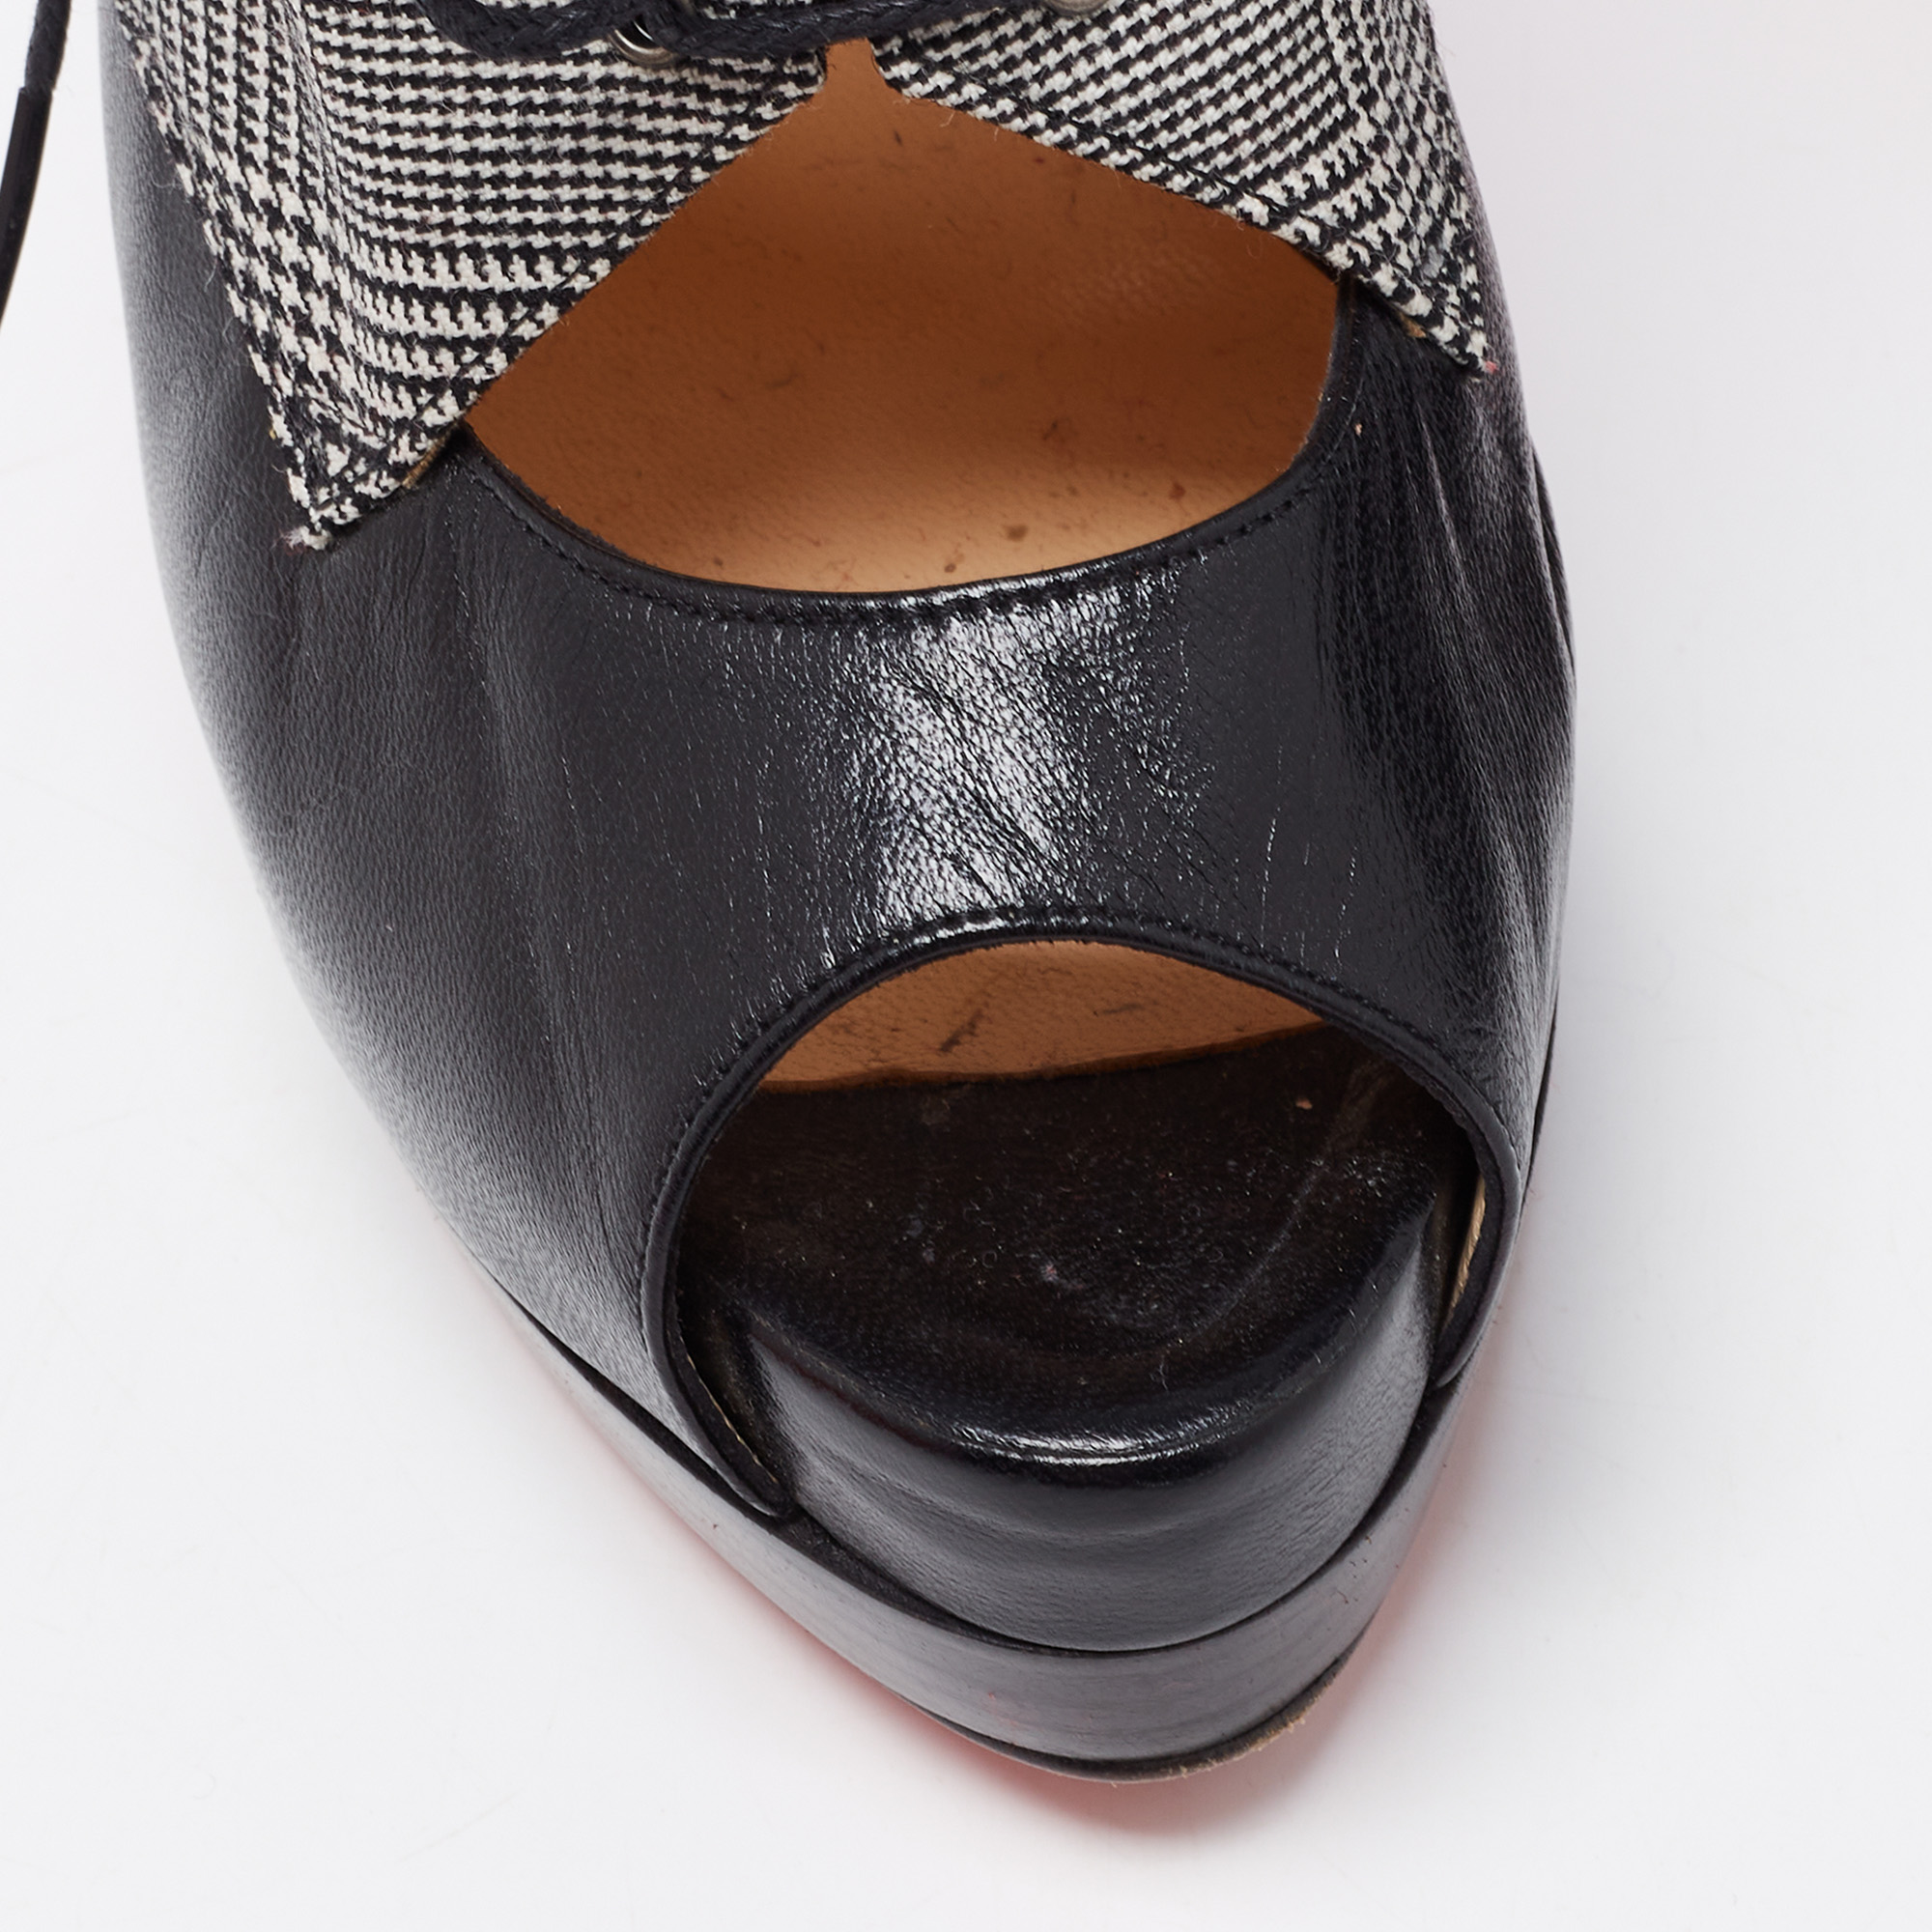 Christian Louboutin Black Leather And Tartan Fabric Platform Oxford Booties Size 38.5